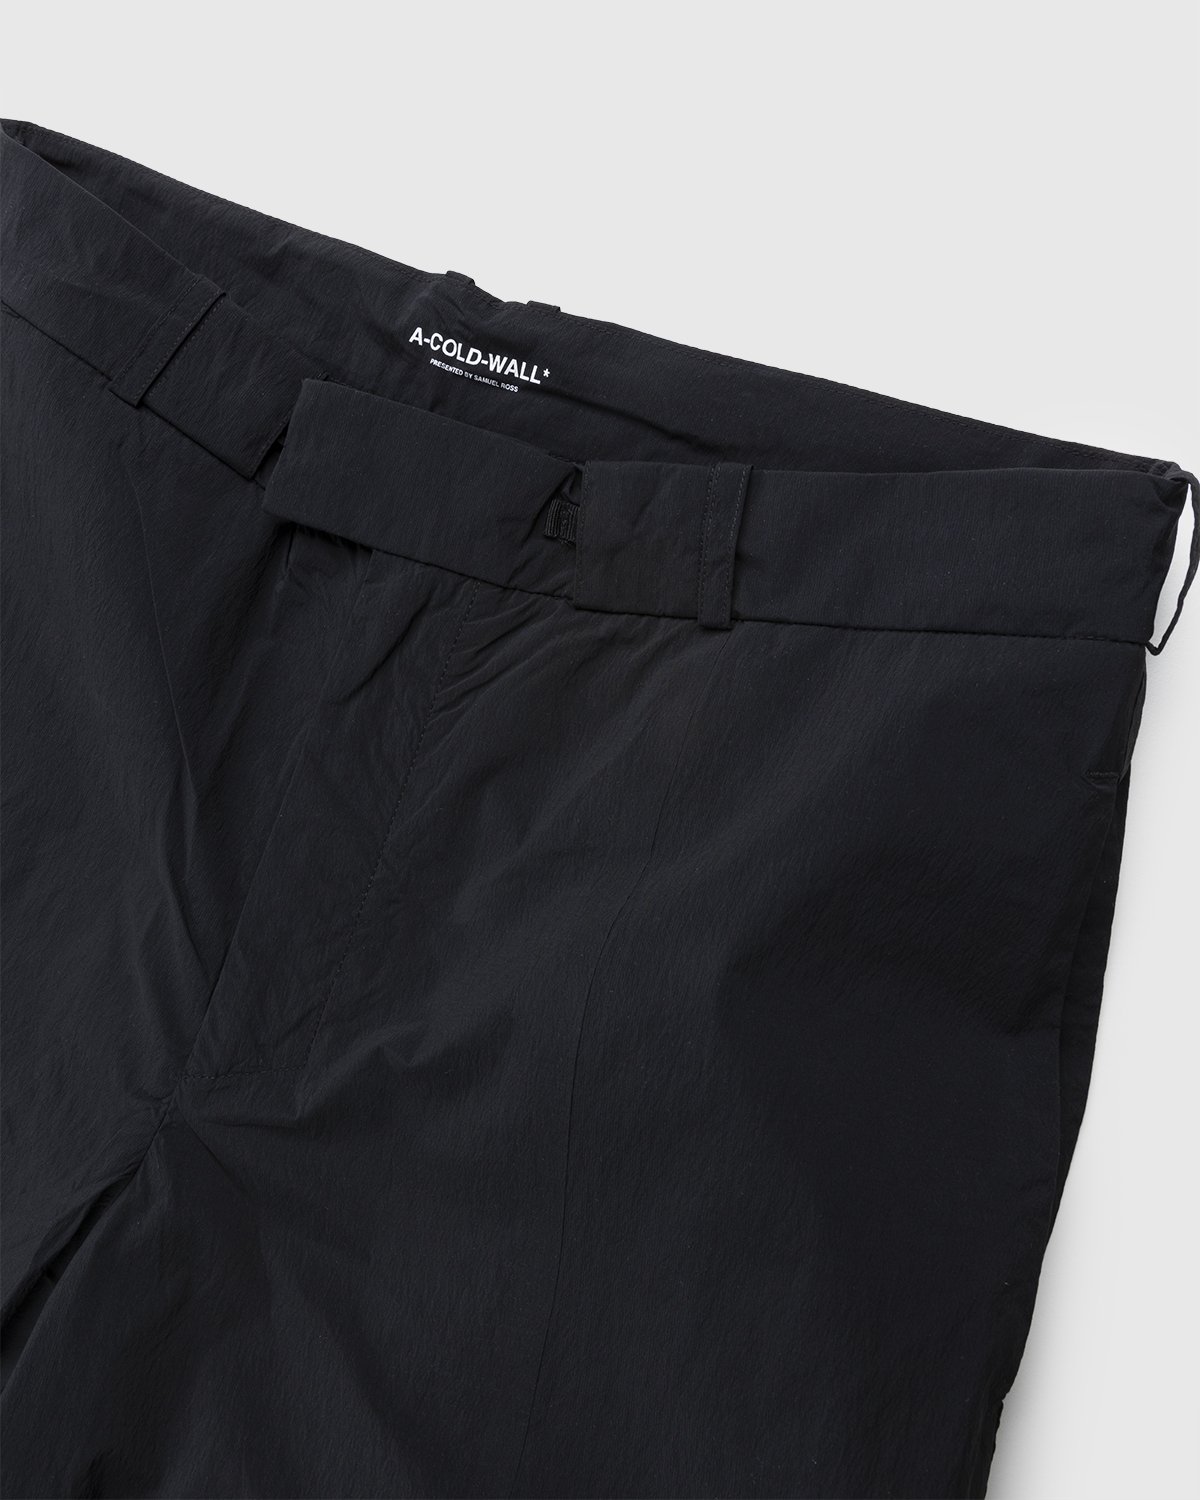 A-Cold-Wall* - Stealth Nylon Pants Black - Clothing - Black - Image 4